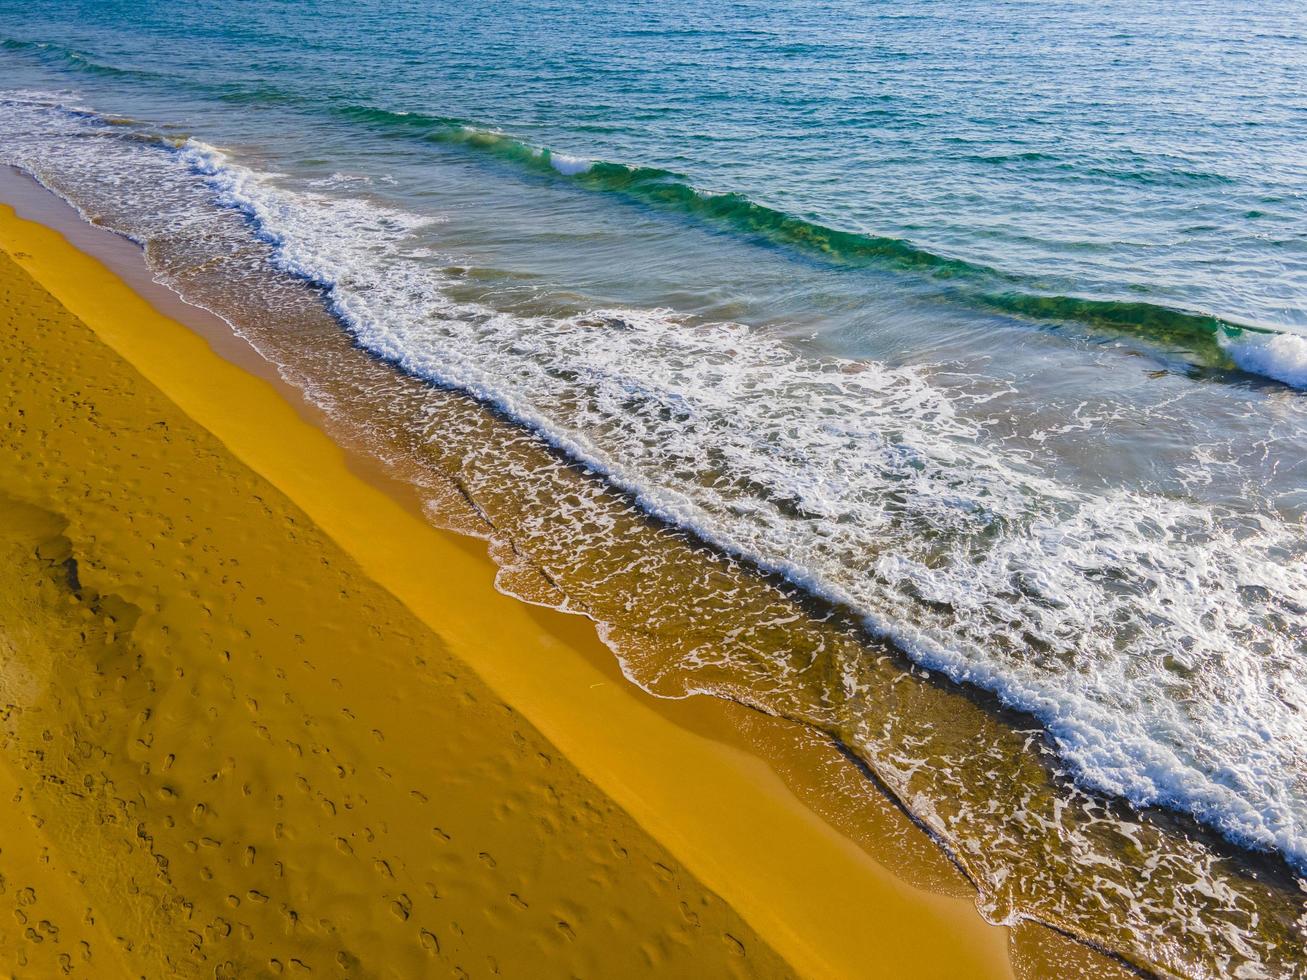 playa perfecta y vista tranquila al mar foto